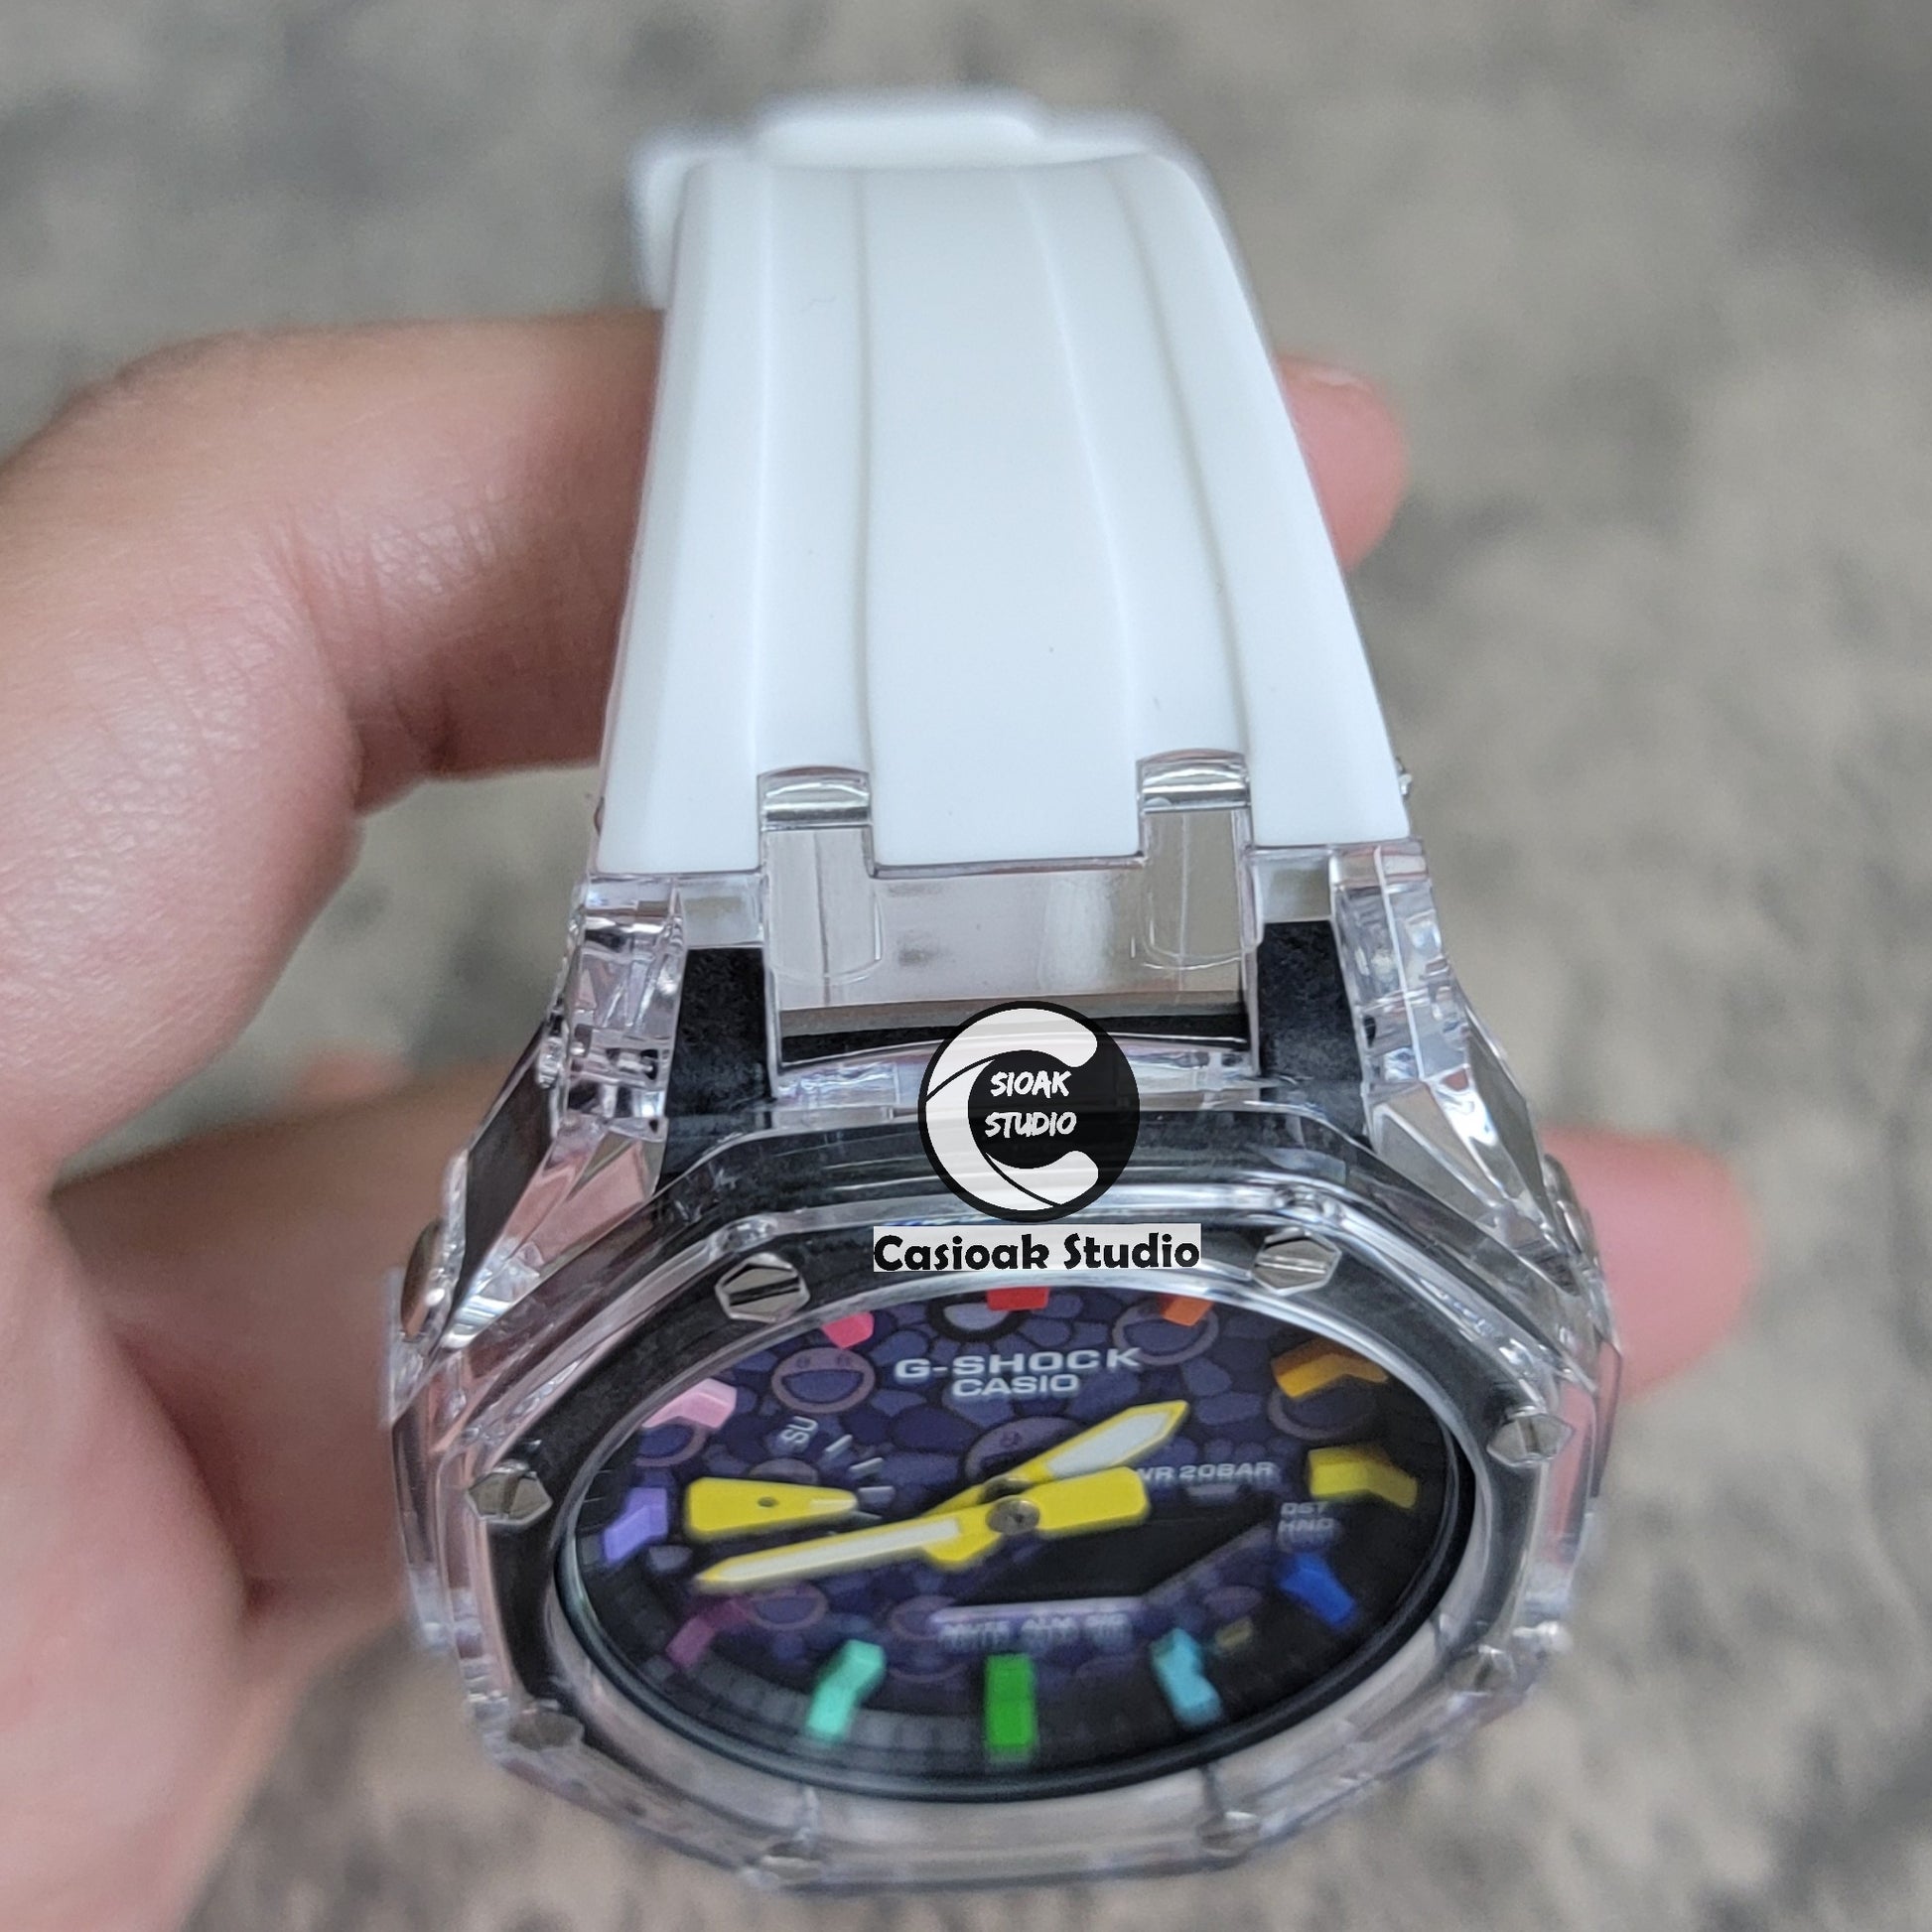 Casioak Mod Transparent Case White Strap Black Rainbow Time Mark Purple Takashi Murakami Dial 44mm - Casioak Studio